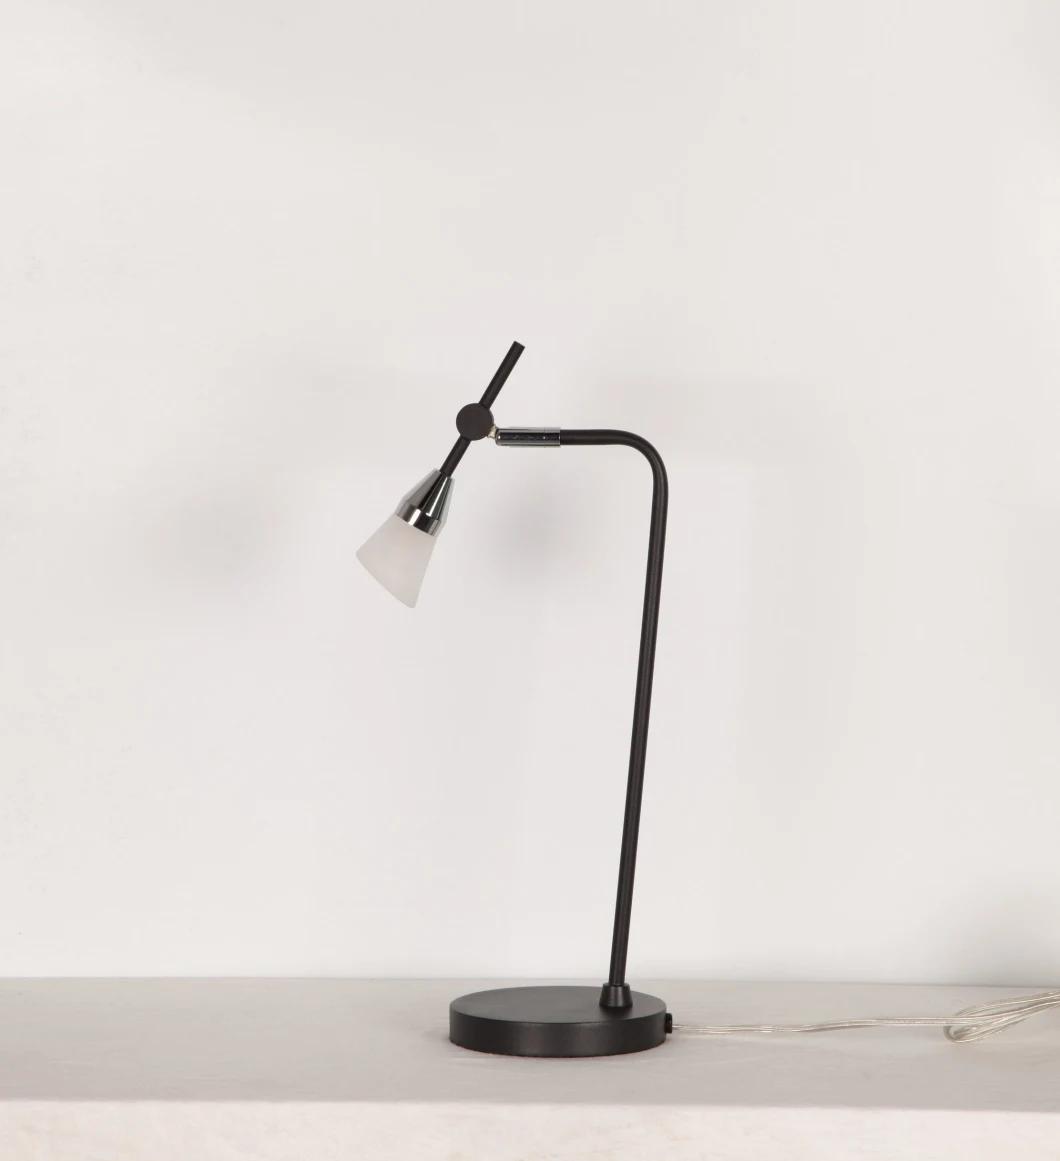 Masivel Lighting Desk Light Simple Reading Desktop Bedside Table Lamp